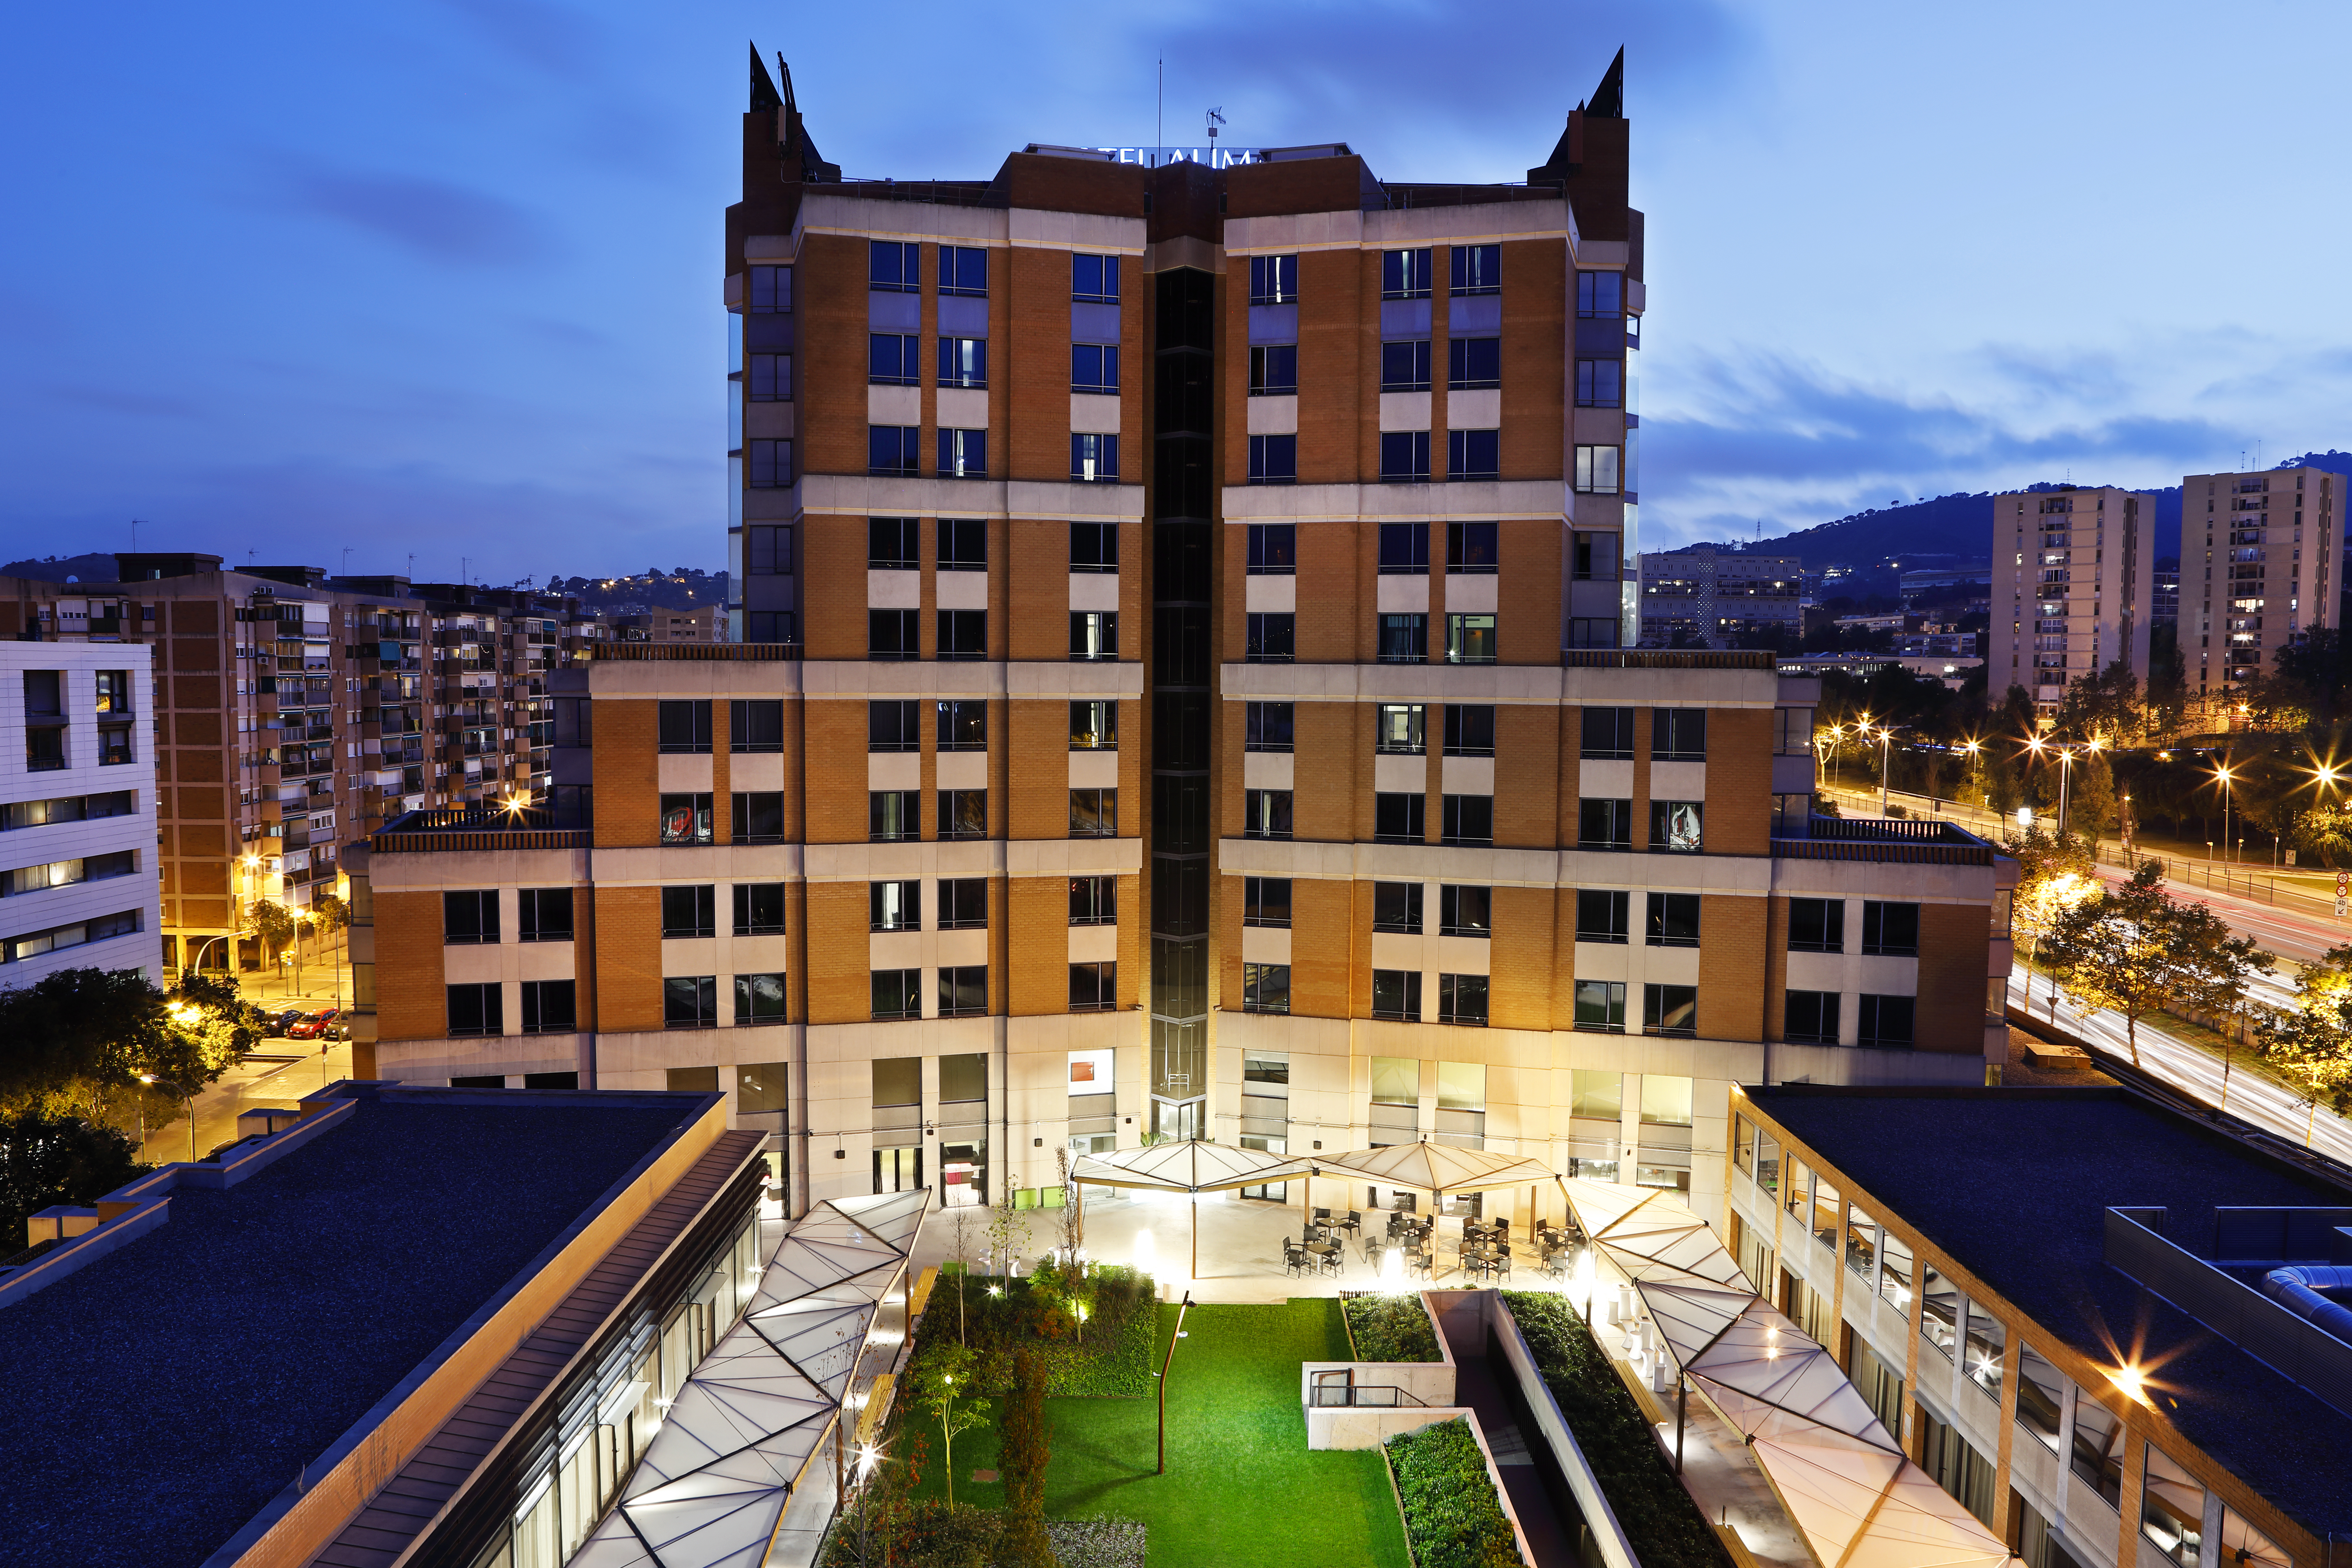 Fotografia de: Alimara, hotel universitari de Barcelona | CETT